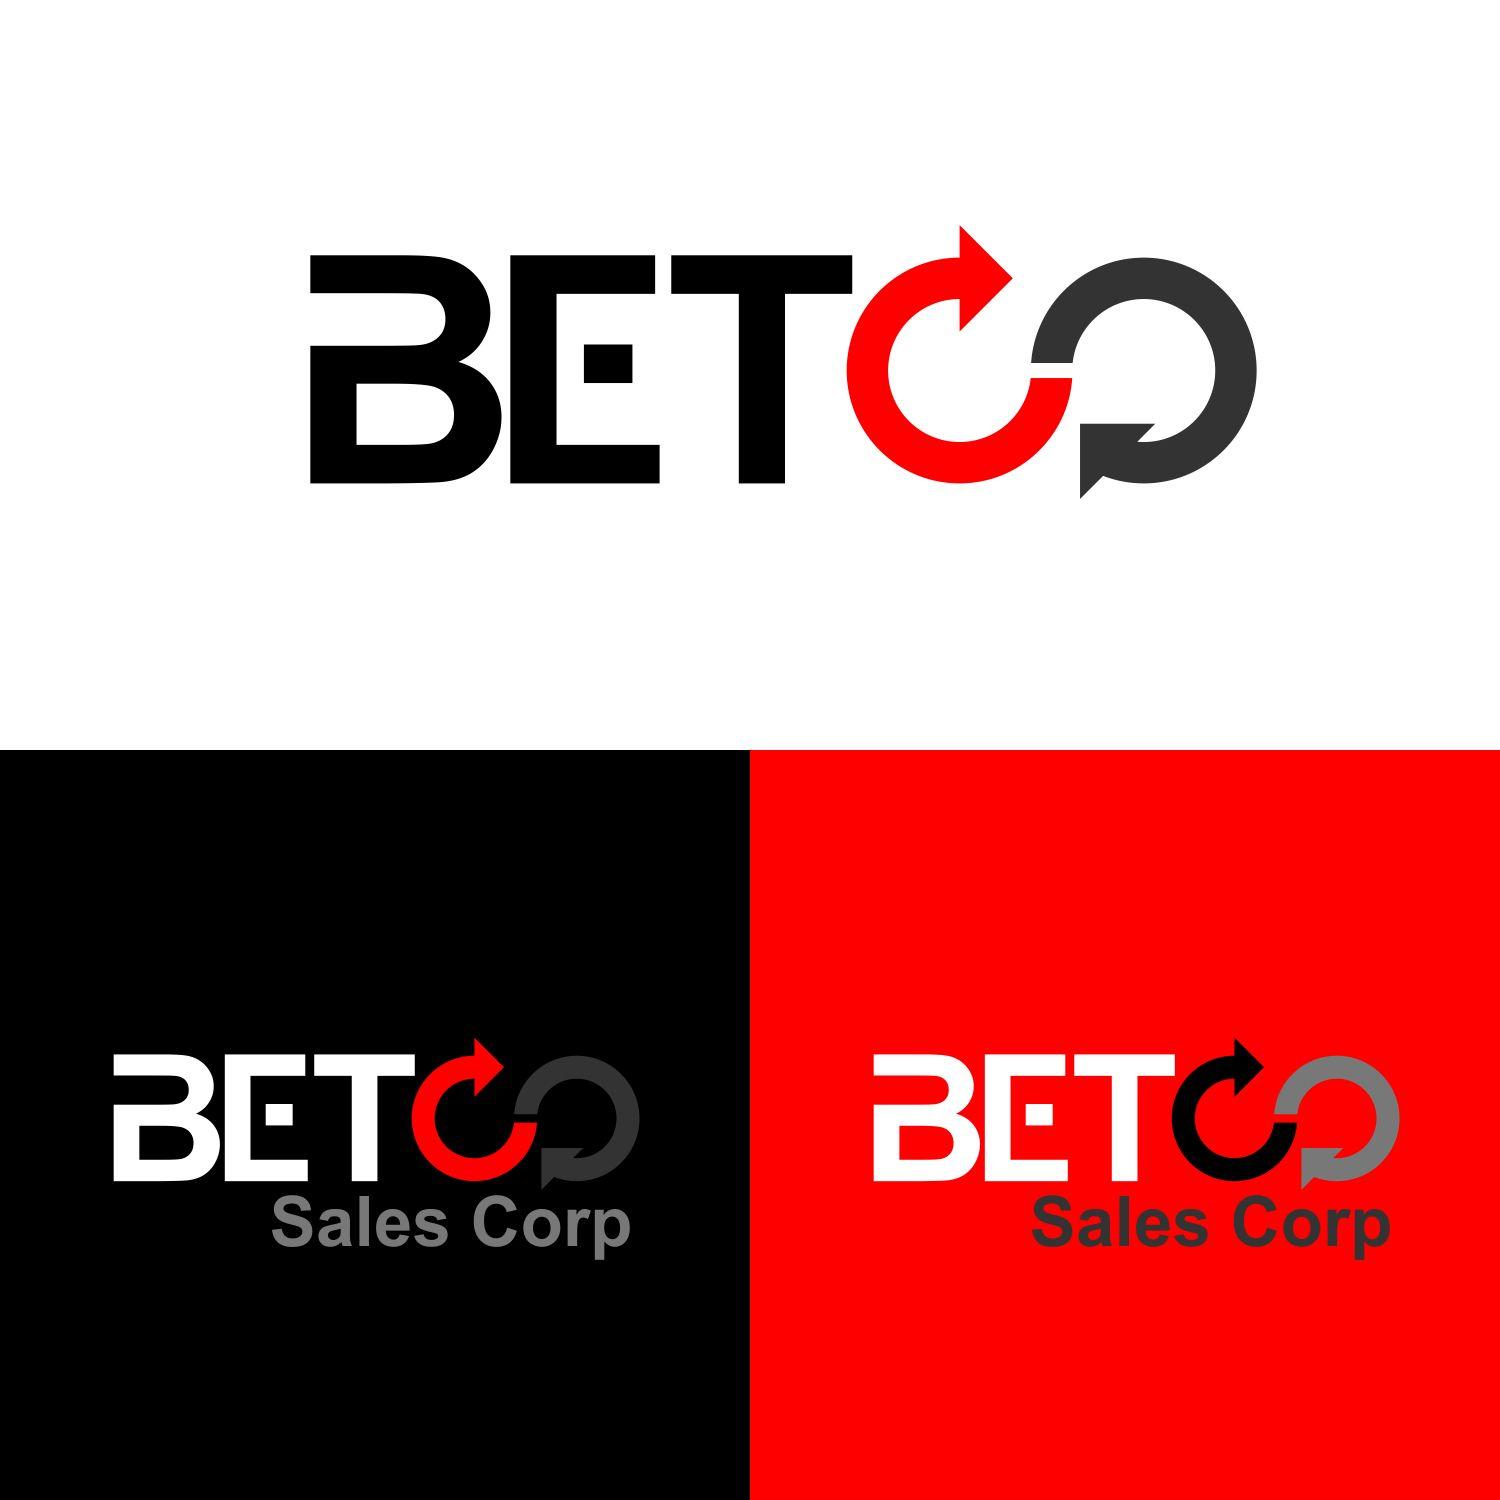 Betco Logo - Logo Design for Betco Sales Corp by Cherlyndo Paterias | Design ...